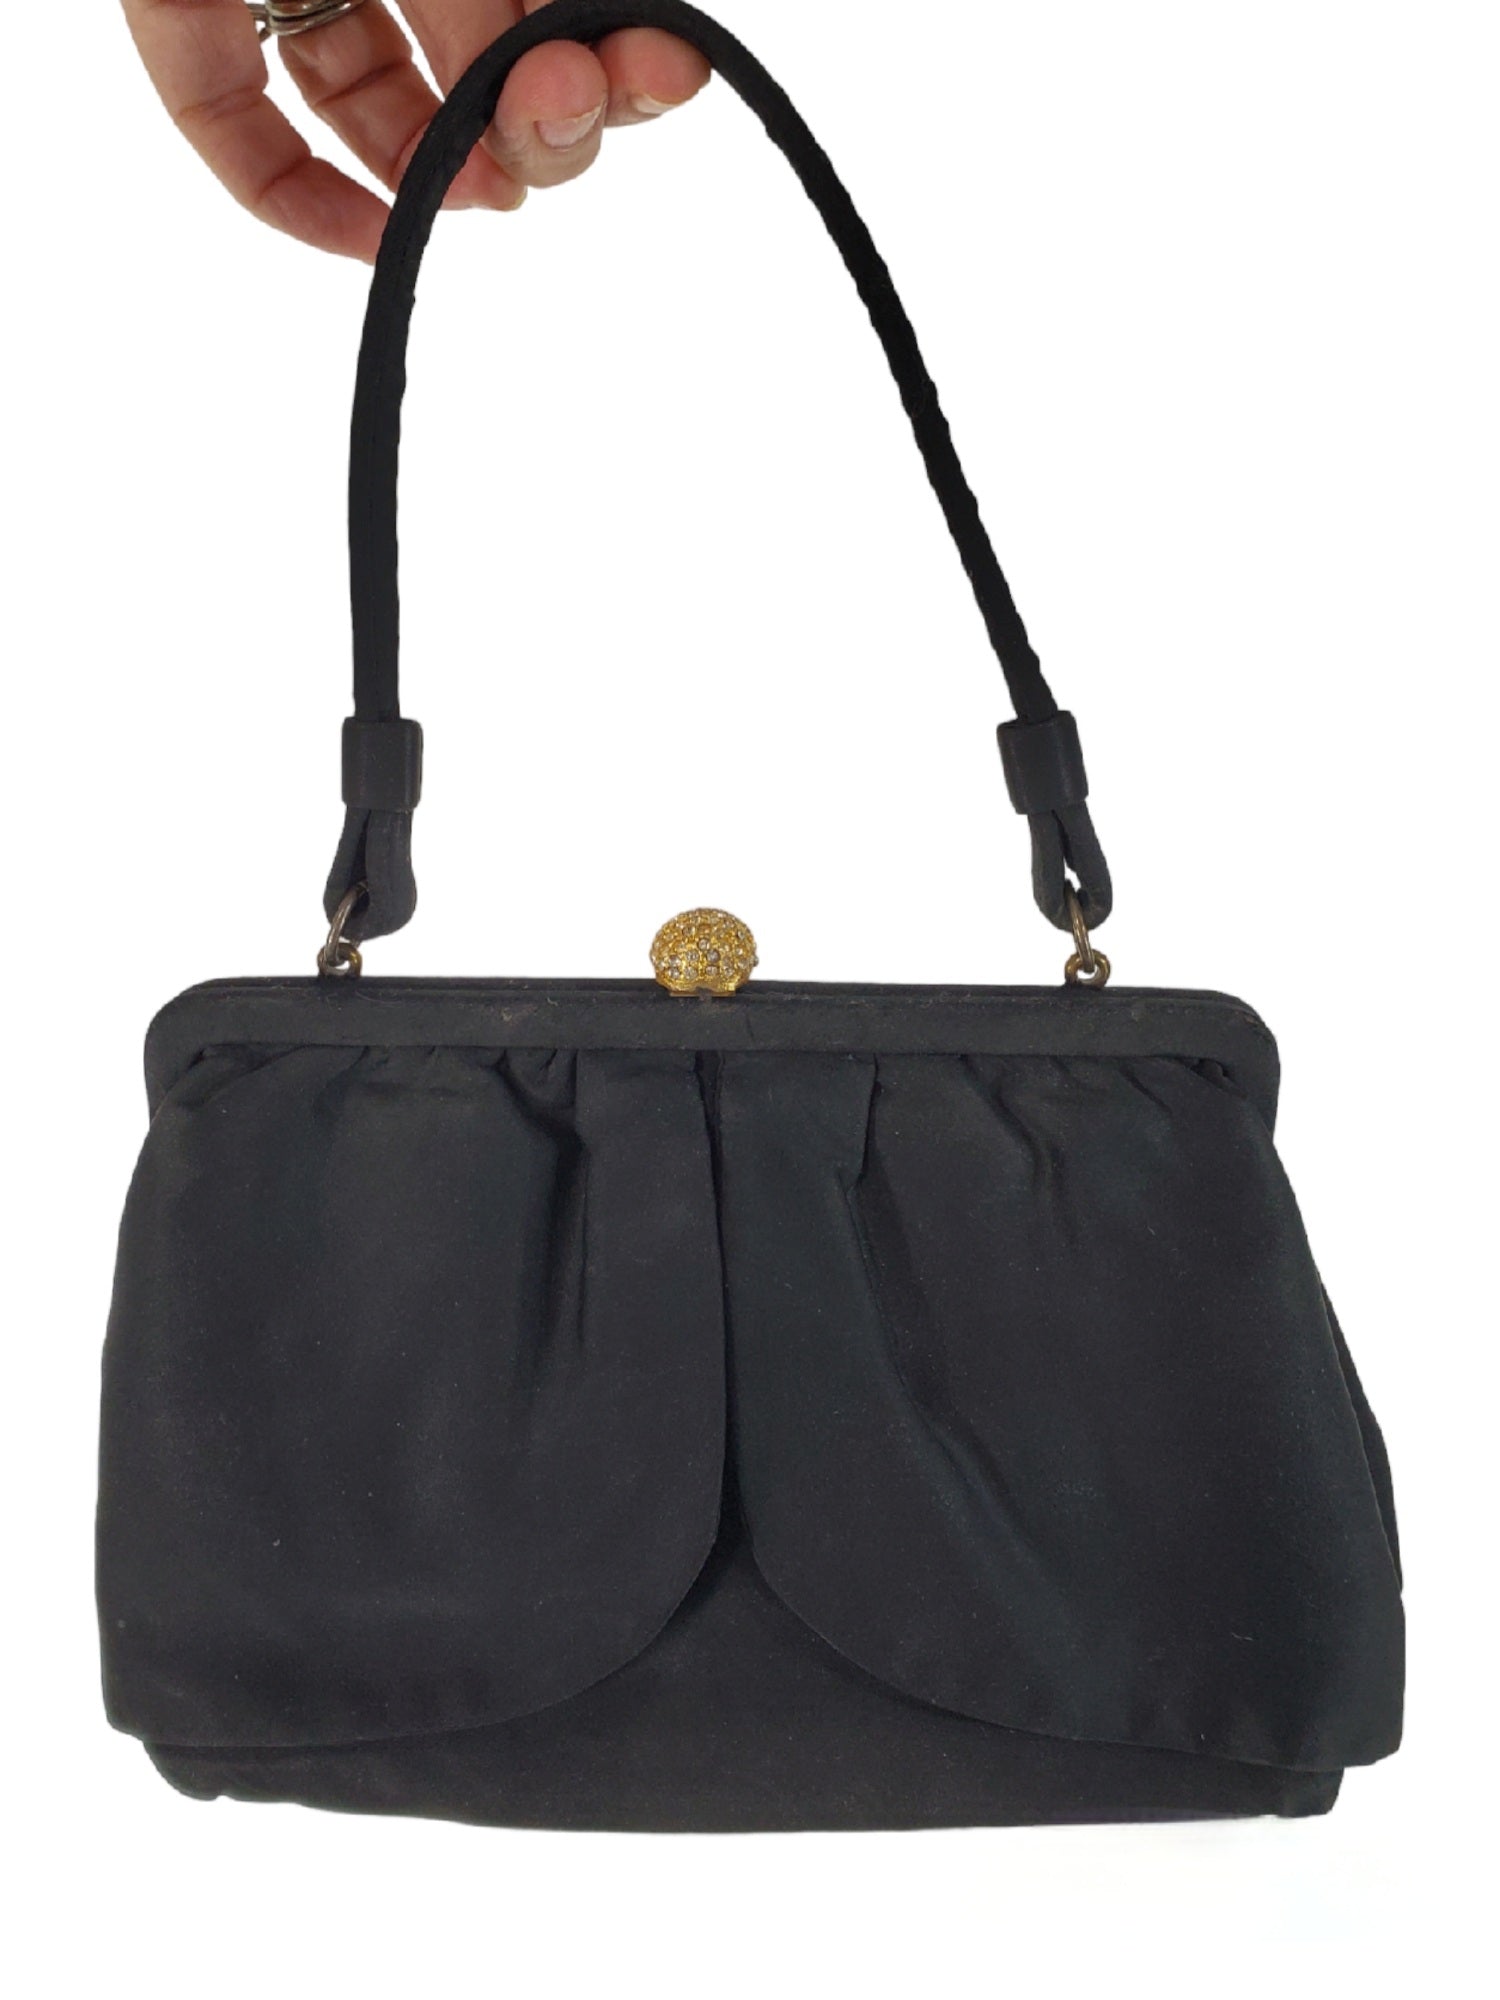 Black Satin Clutch Purse Elegant Box Evening Bag | Wedding clutch purse, Clutch  purse black, Black clutch bags